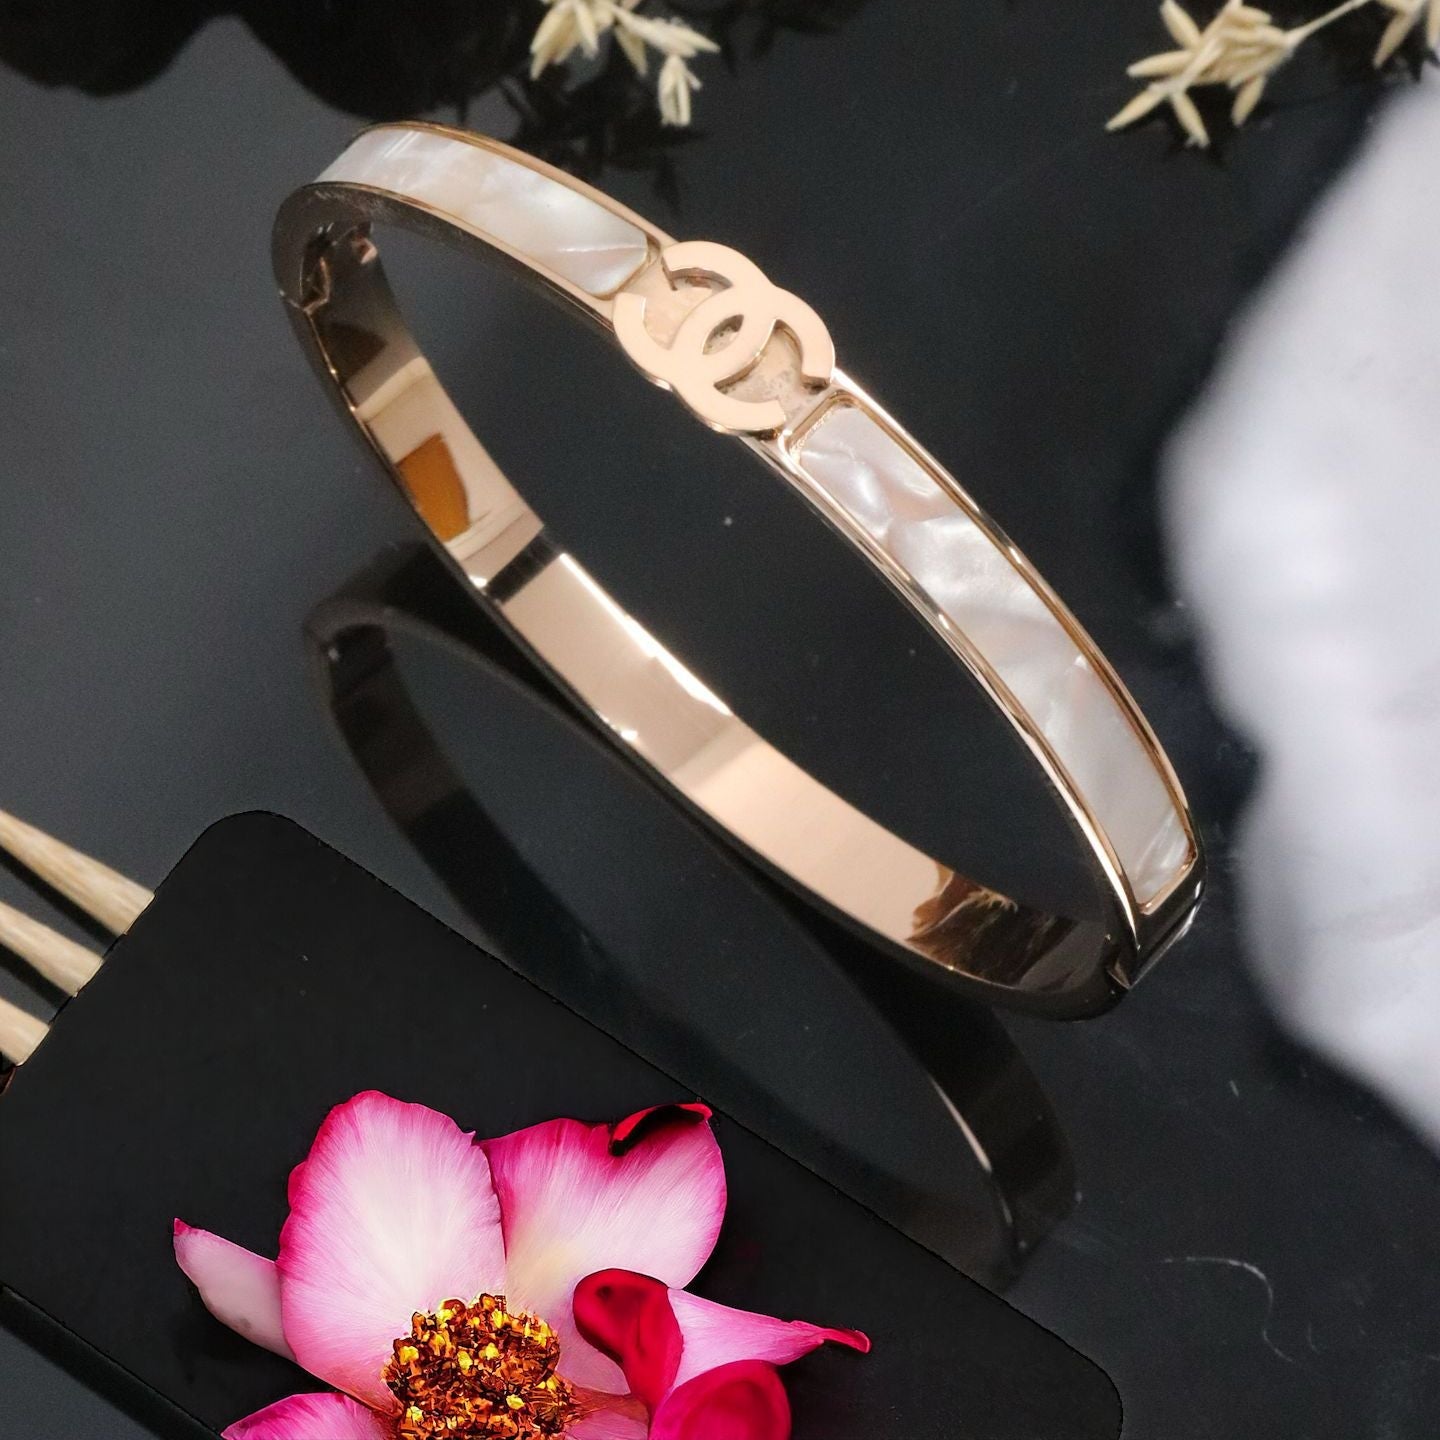 Chanel gold bracelet